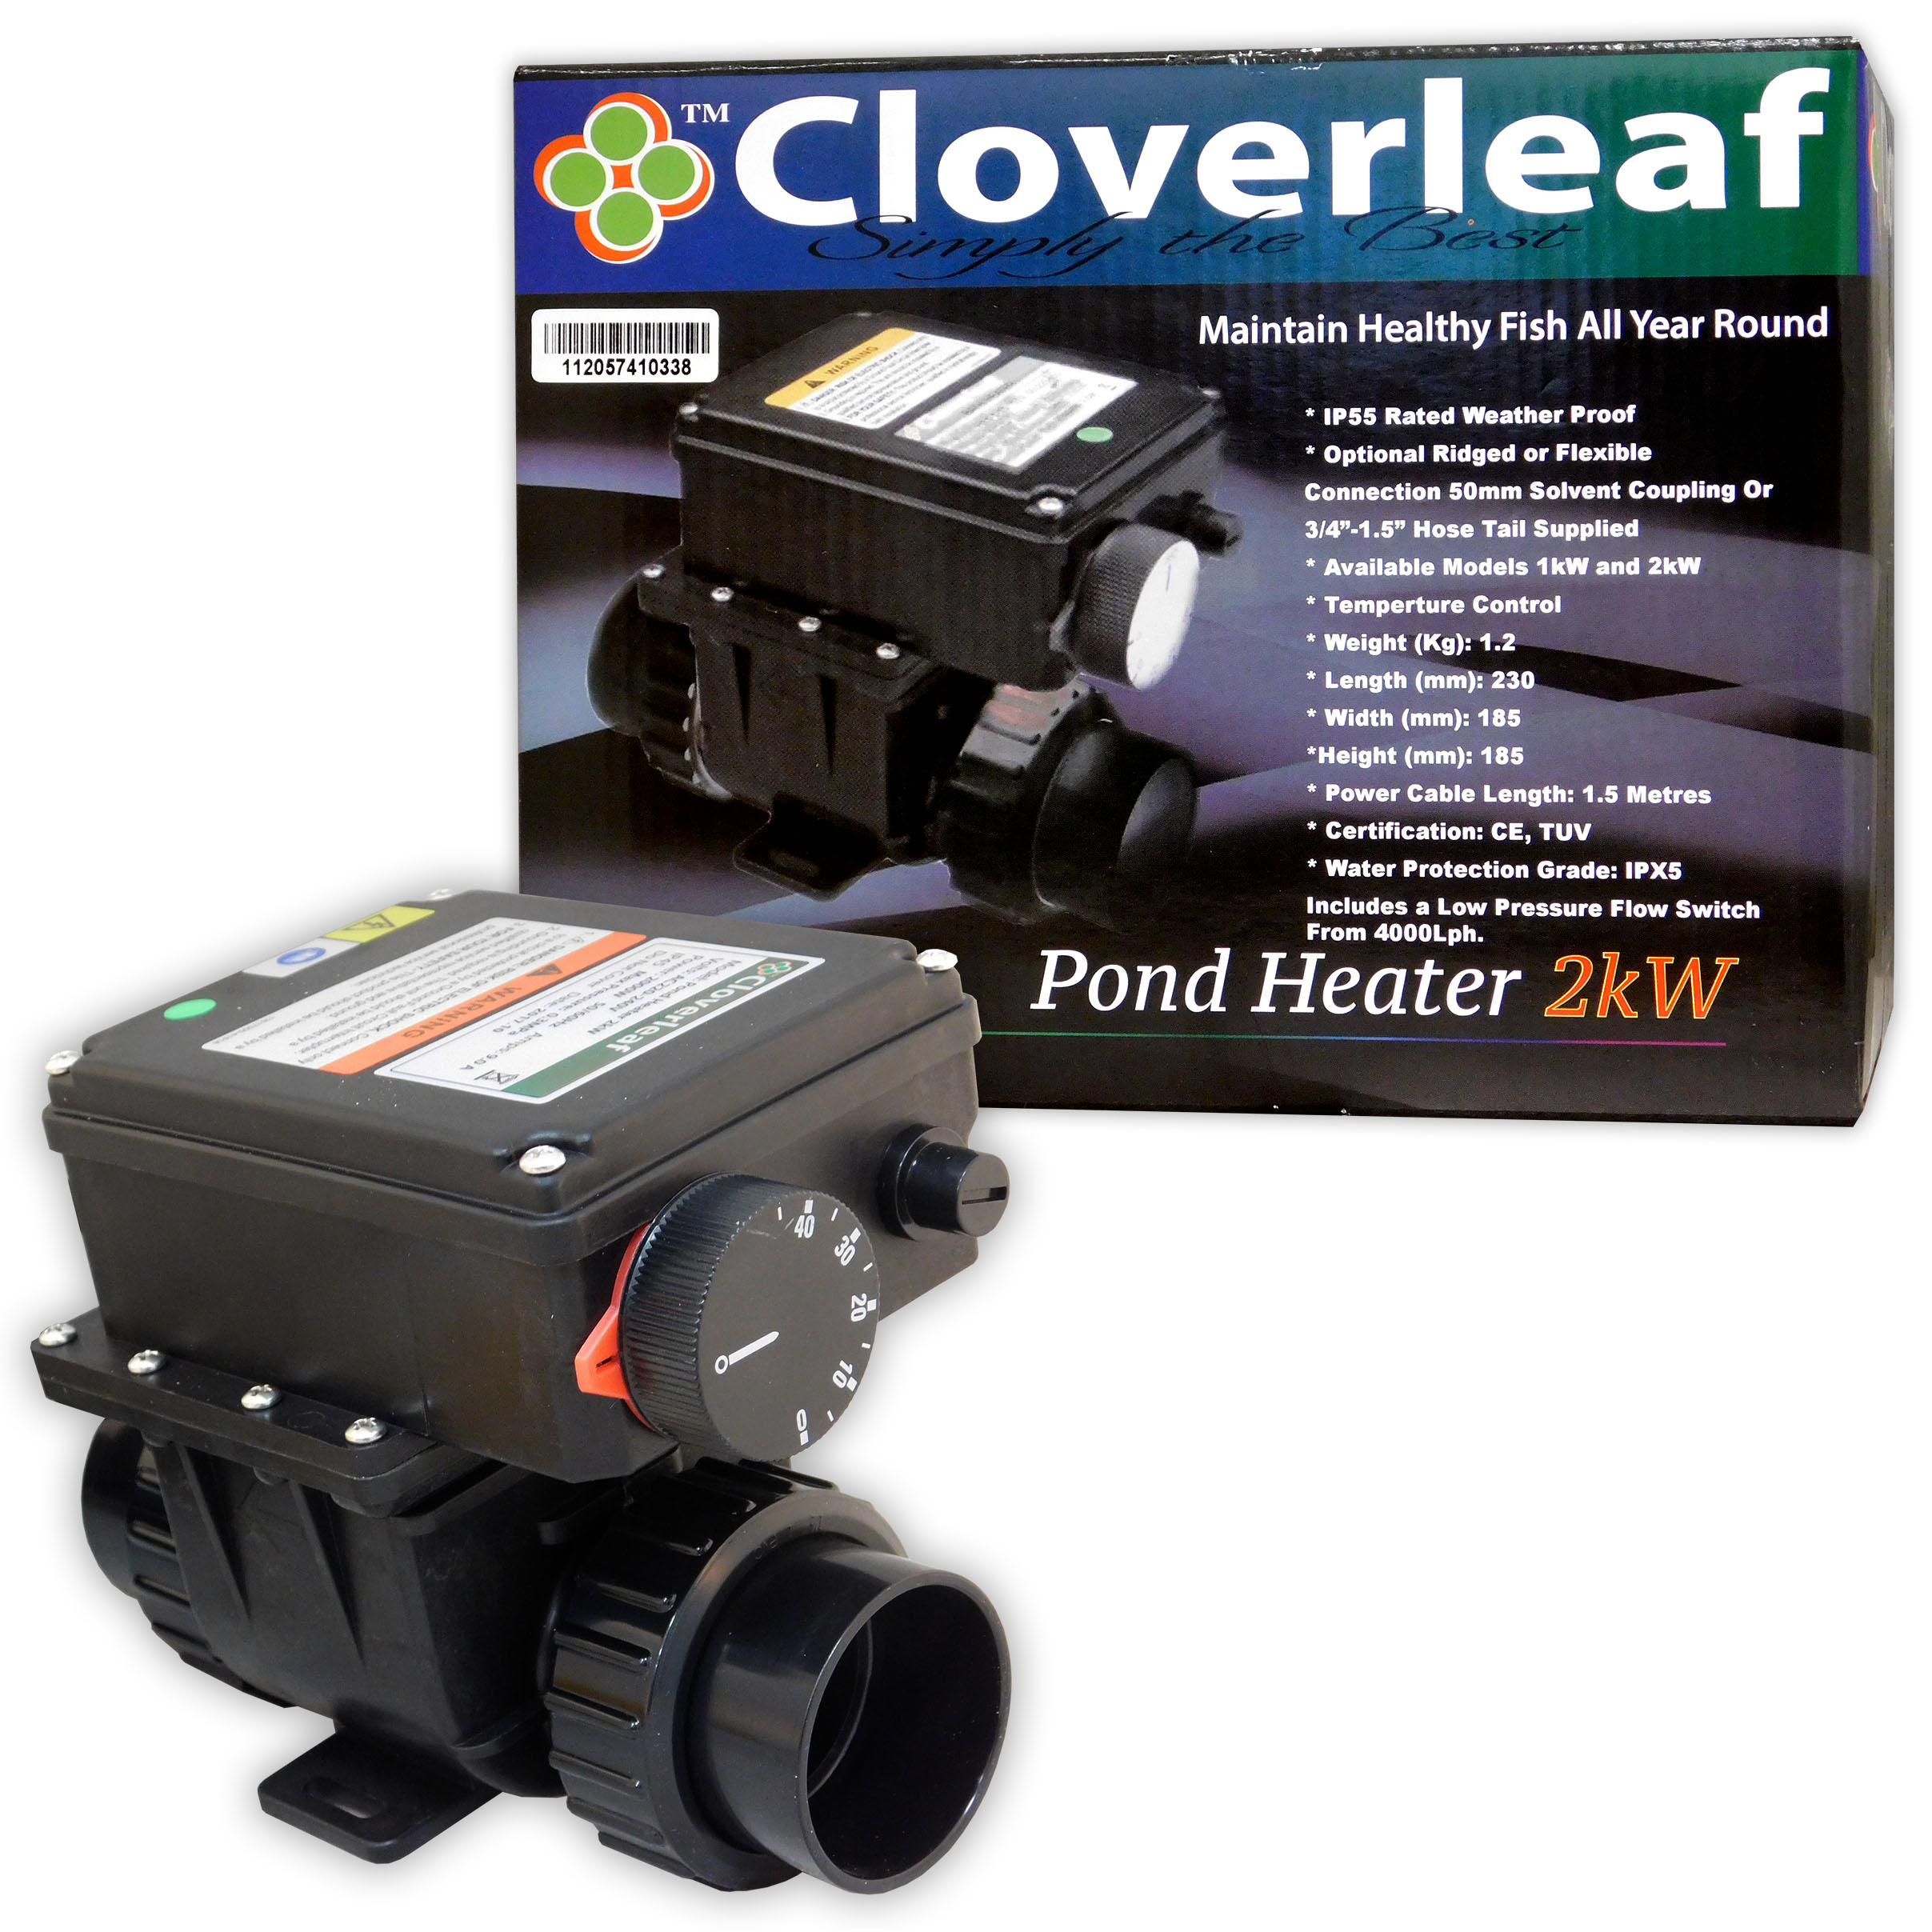 cloverleaf pond heaters 1kw/2kw weatherproof temperature control healthy fish image 1